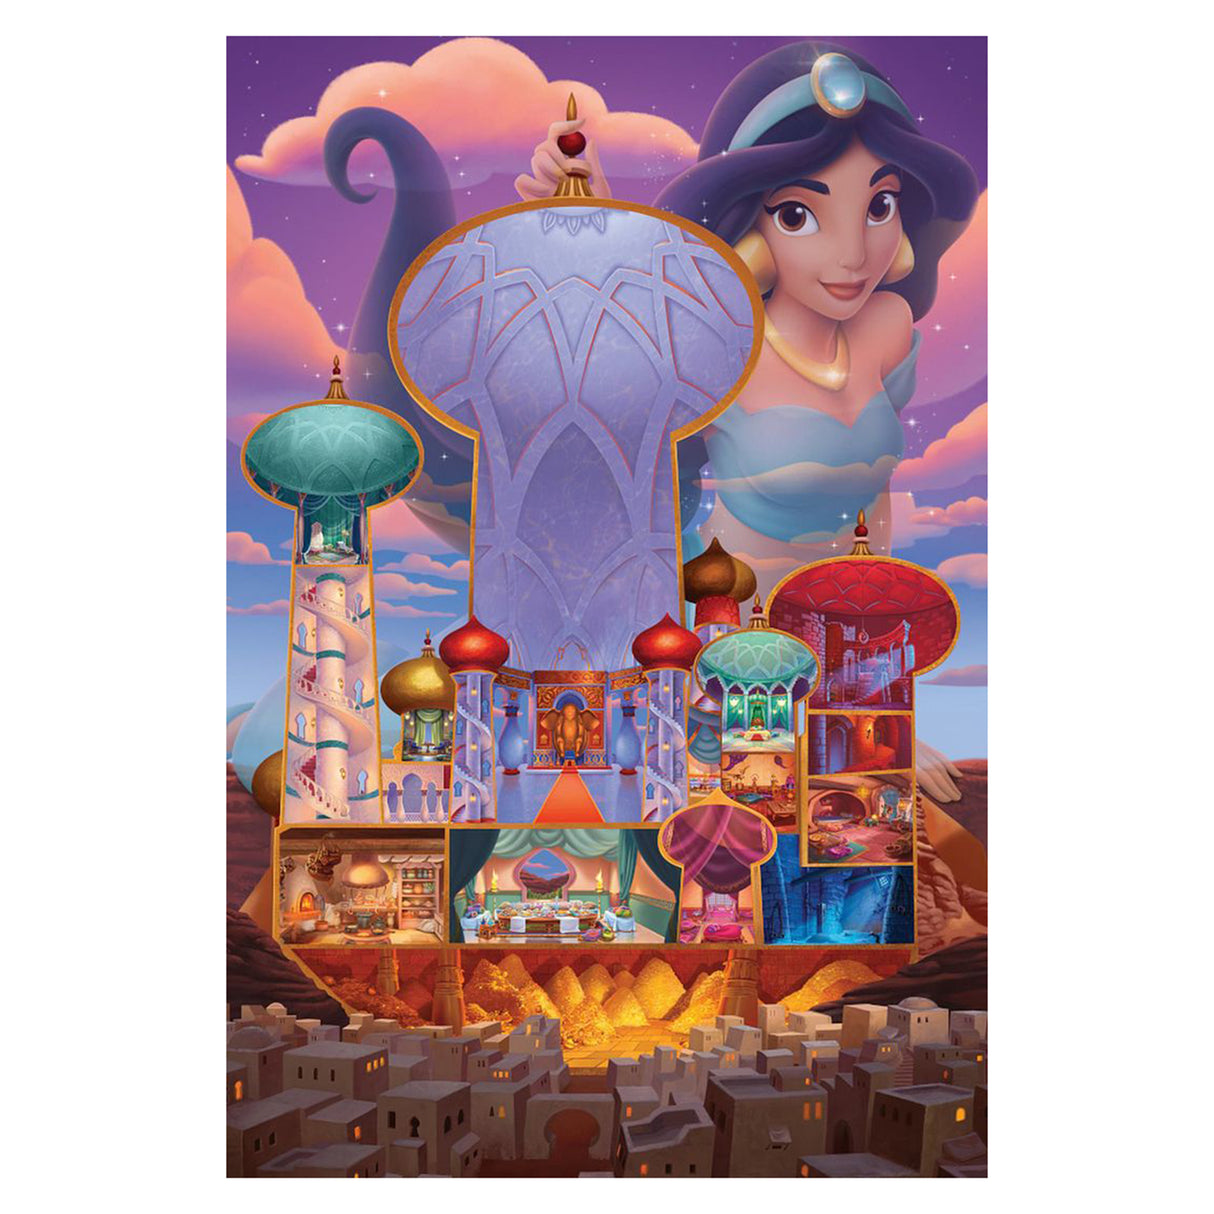 Ravensburger Disney Castles: Jasmin Puzzle (1000 pieces)